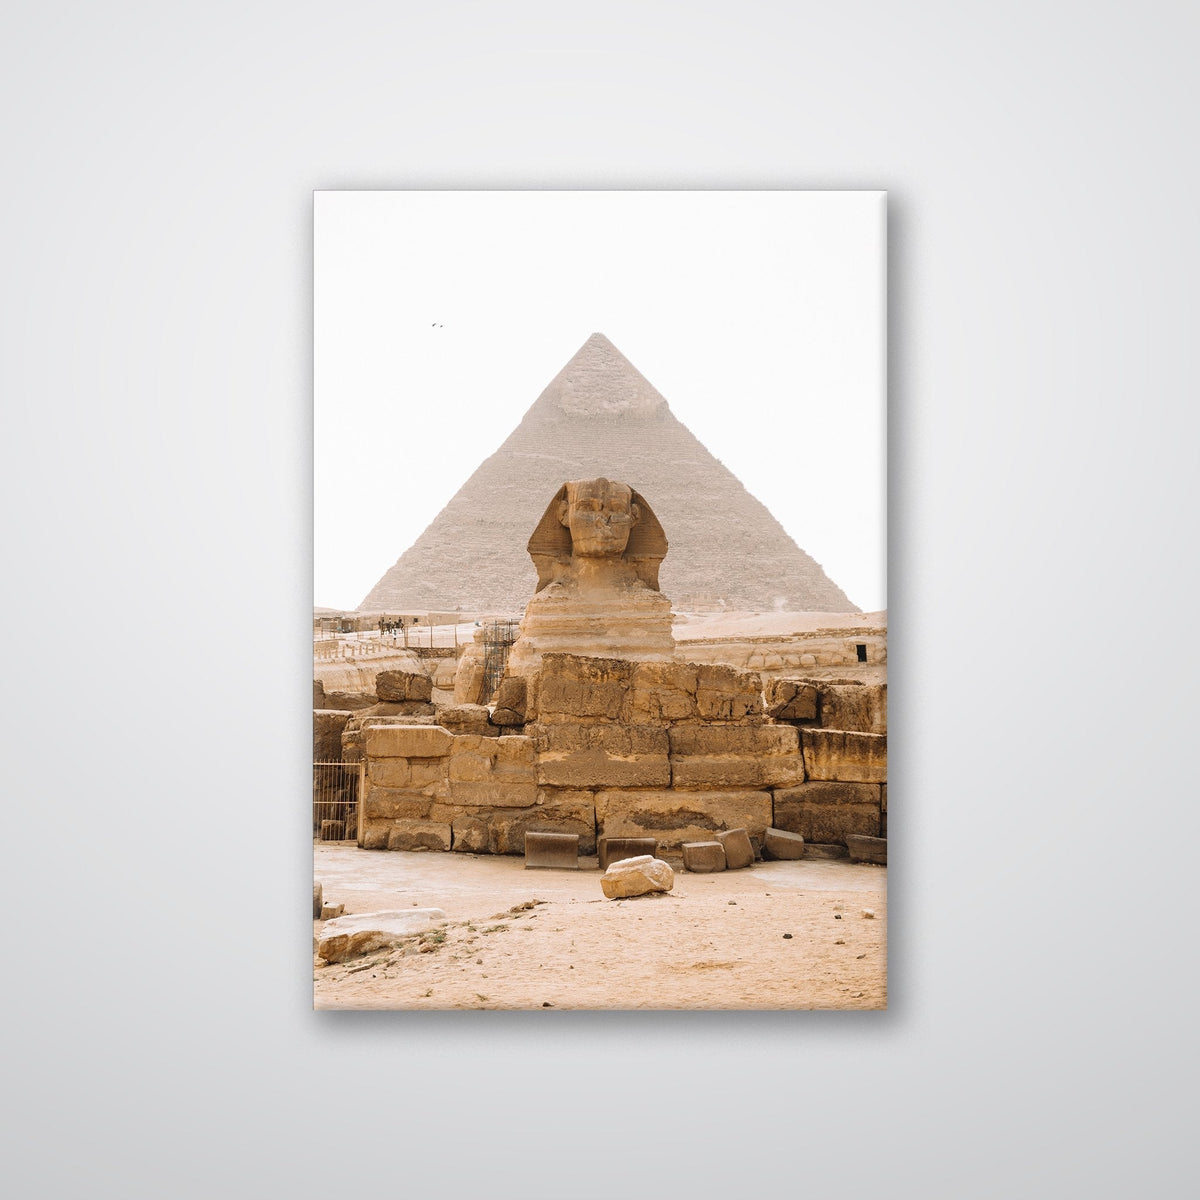 Pyramid of Giza - Metal Print